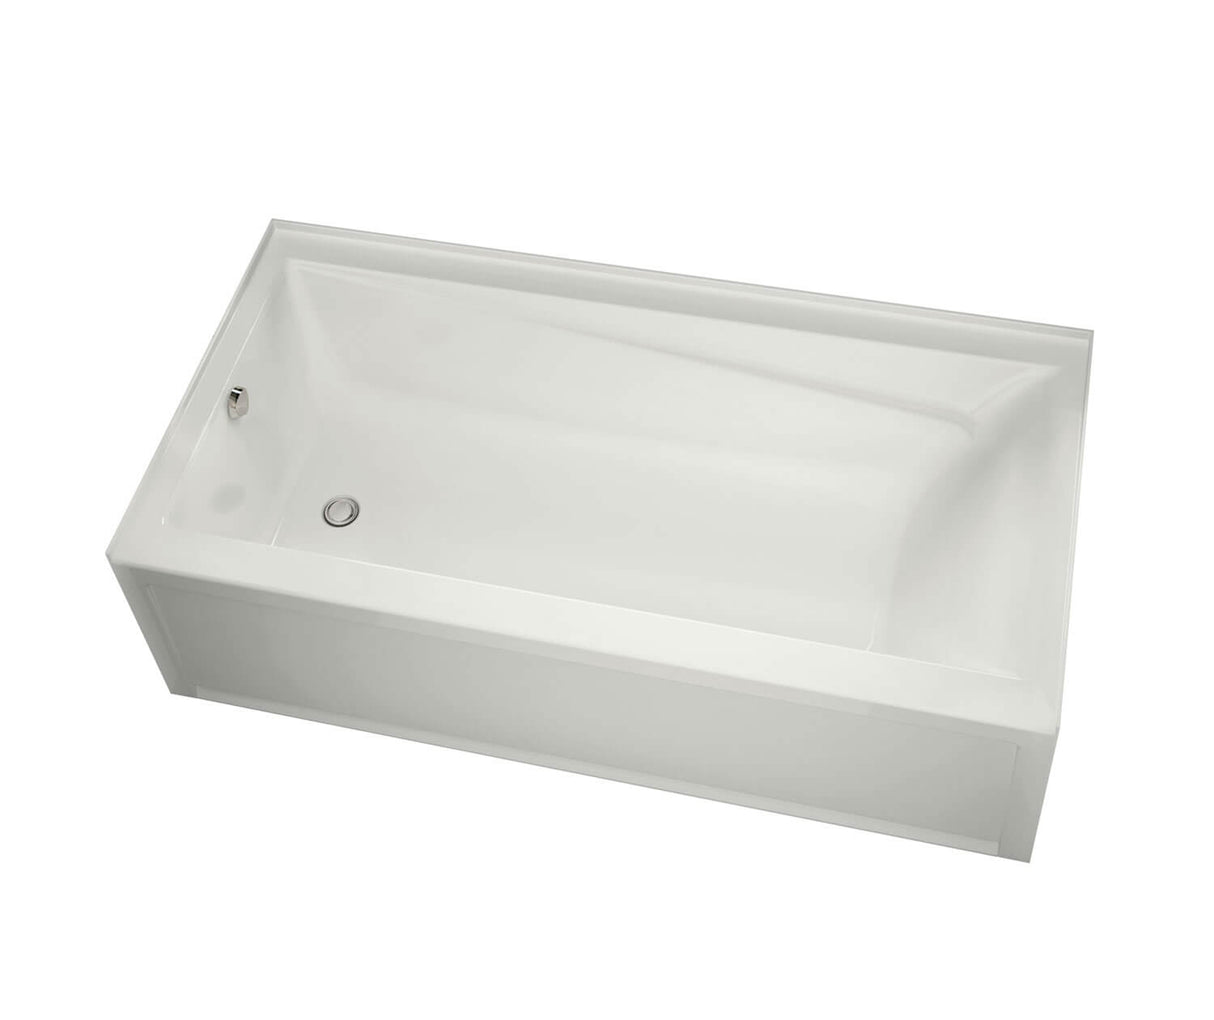 MAAX 106188-R-103-001 Exhibit 7242 IFS AFR Acrylic Alcove Right-Hand Drain Aeroeffect Bathtub in White